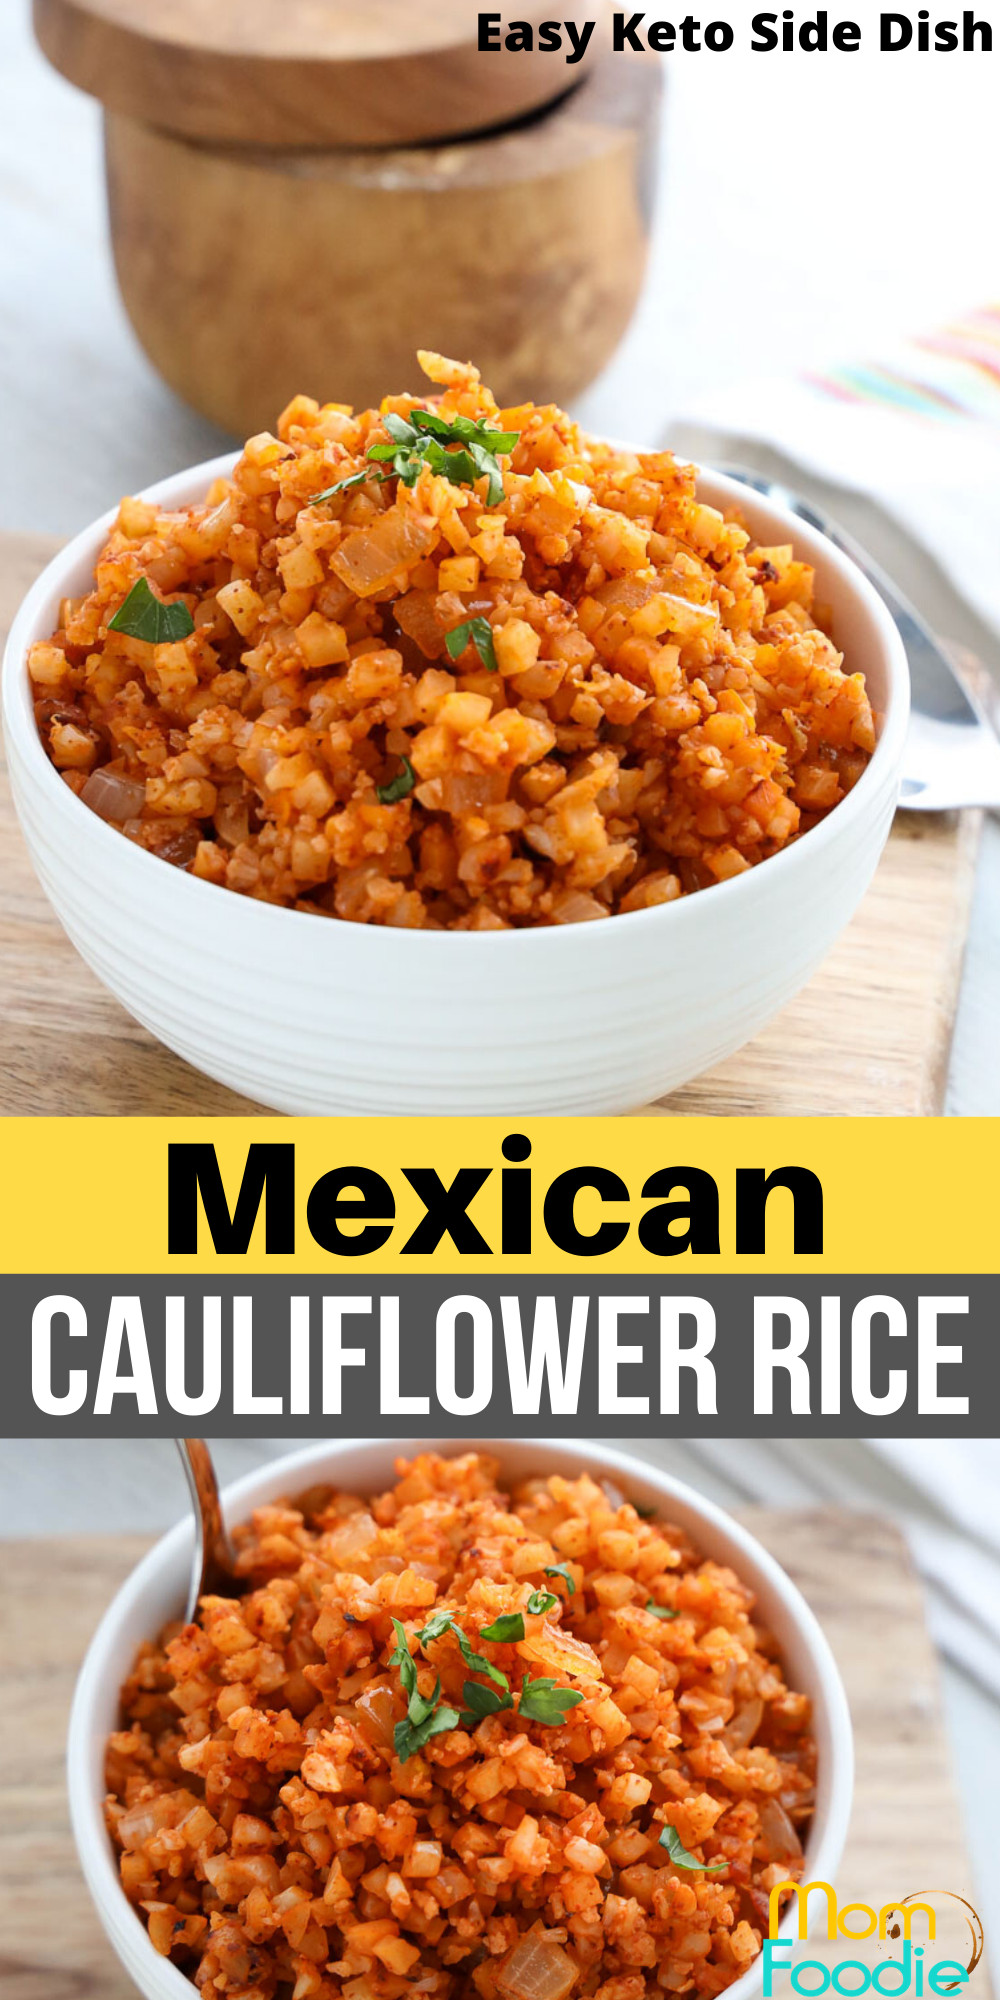 Mexican Keto Sides
 This Mexican Cauliflower Rice aka Spanish cauliflower